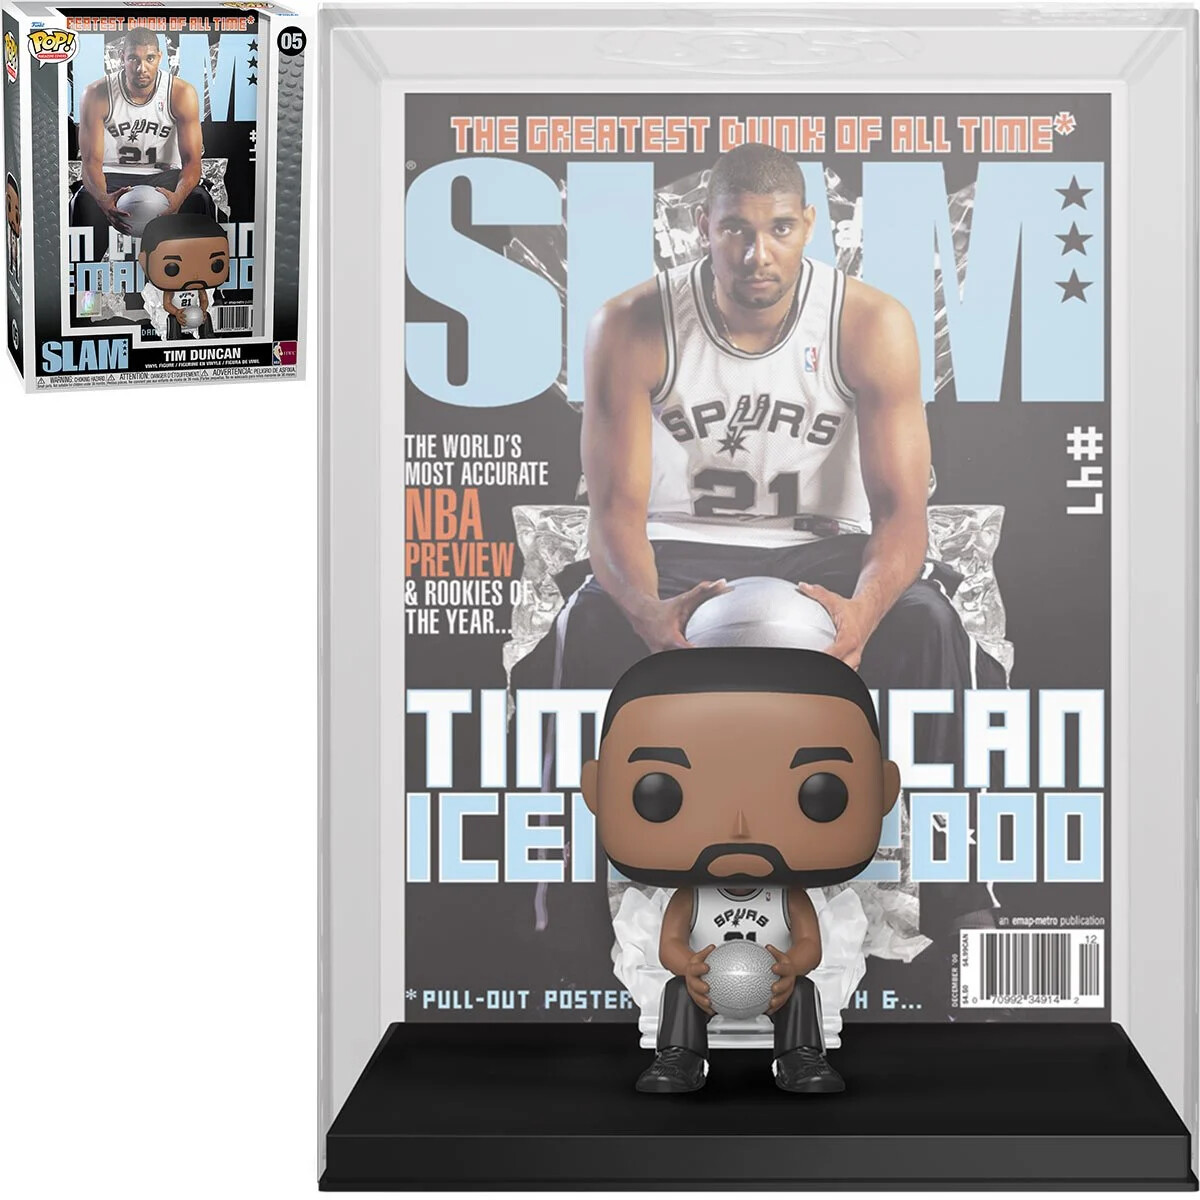 PRE-ORDER Funko NBA SLam Tim Duncan pop! Cover Figure with Case